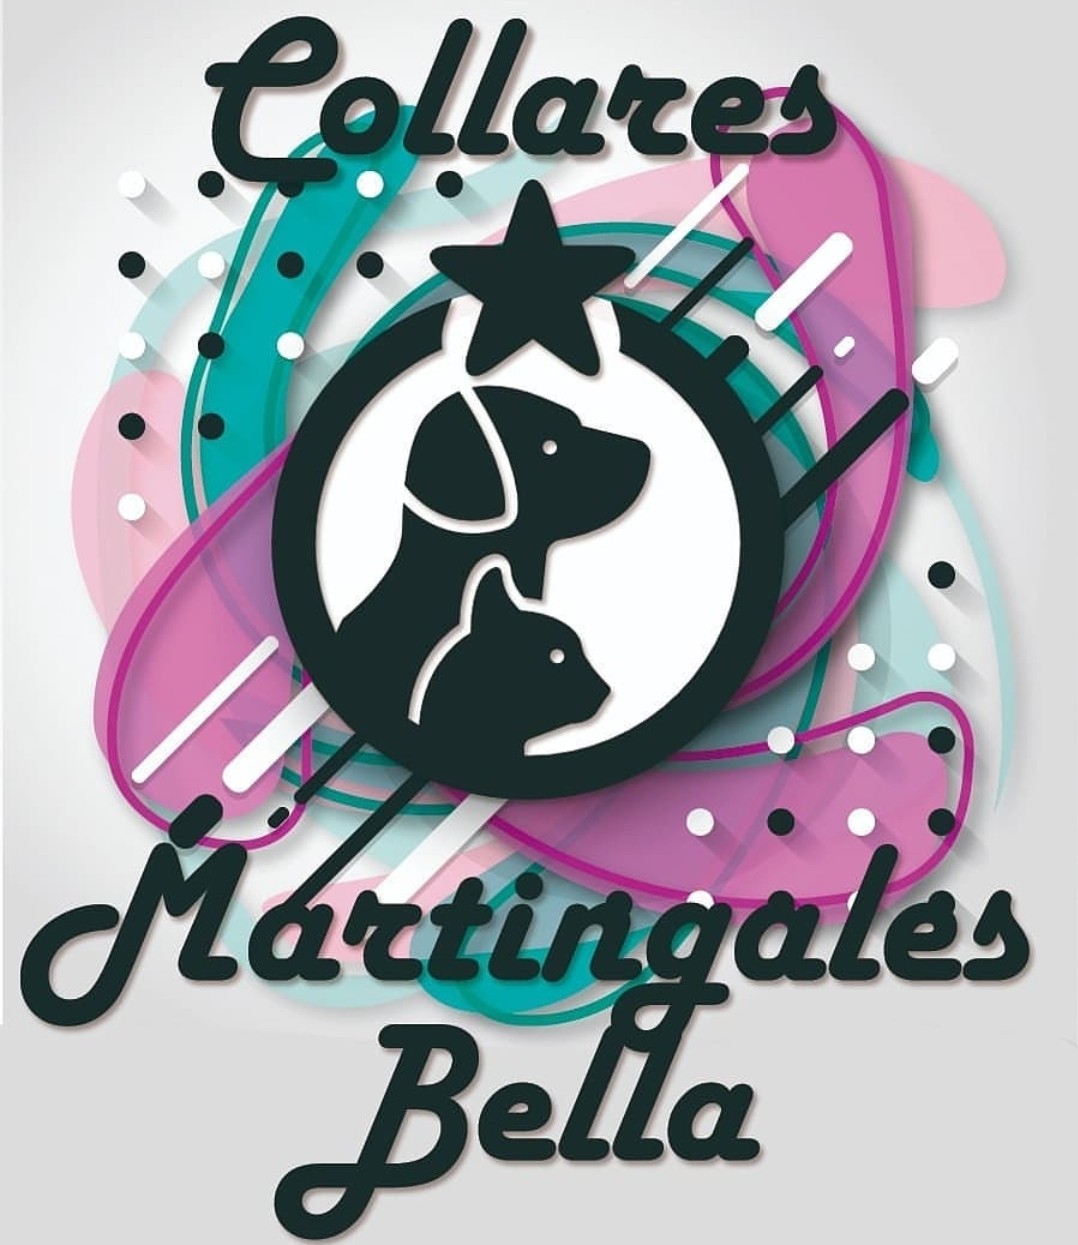 Collares Martingales Bella